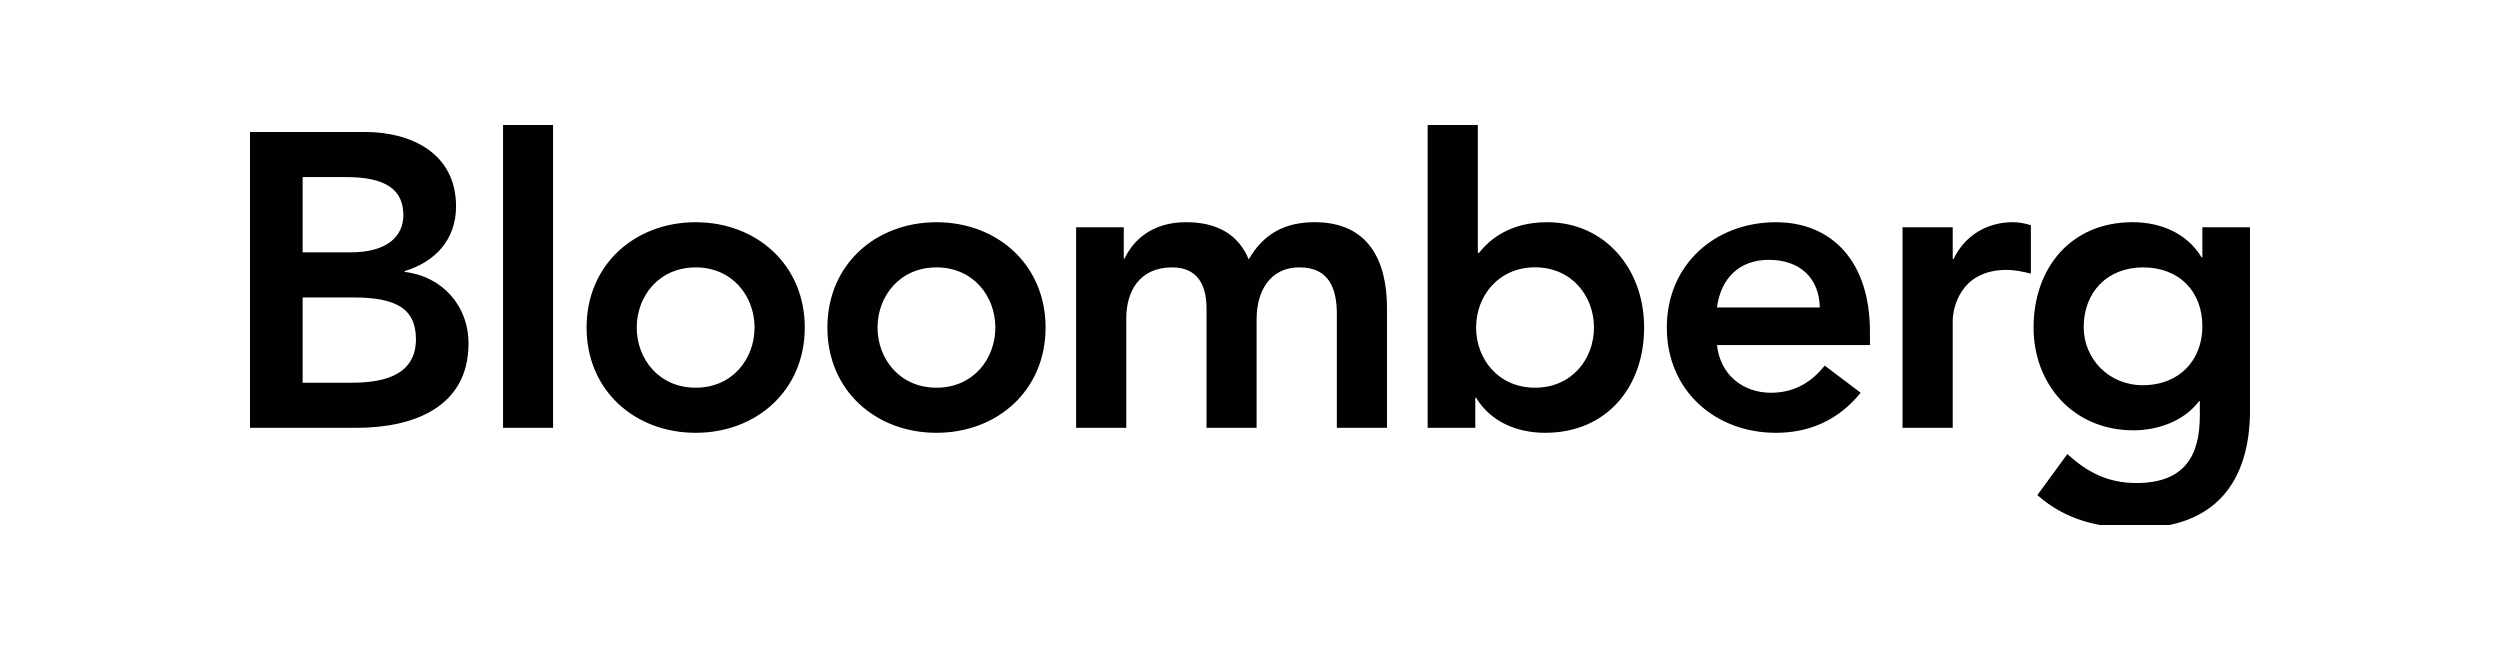 bloomberg-logo1